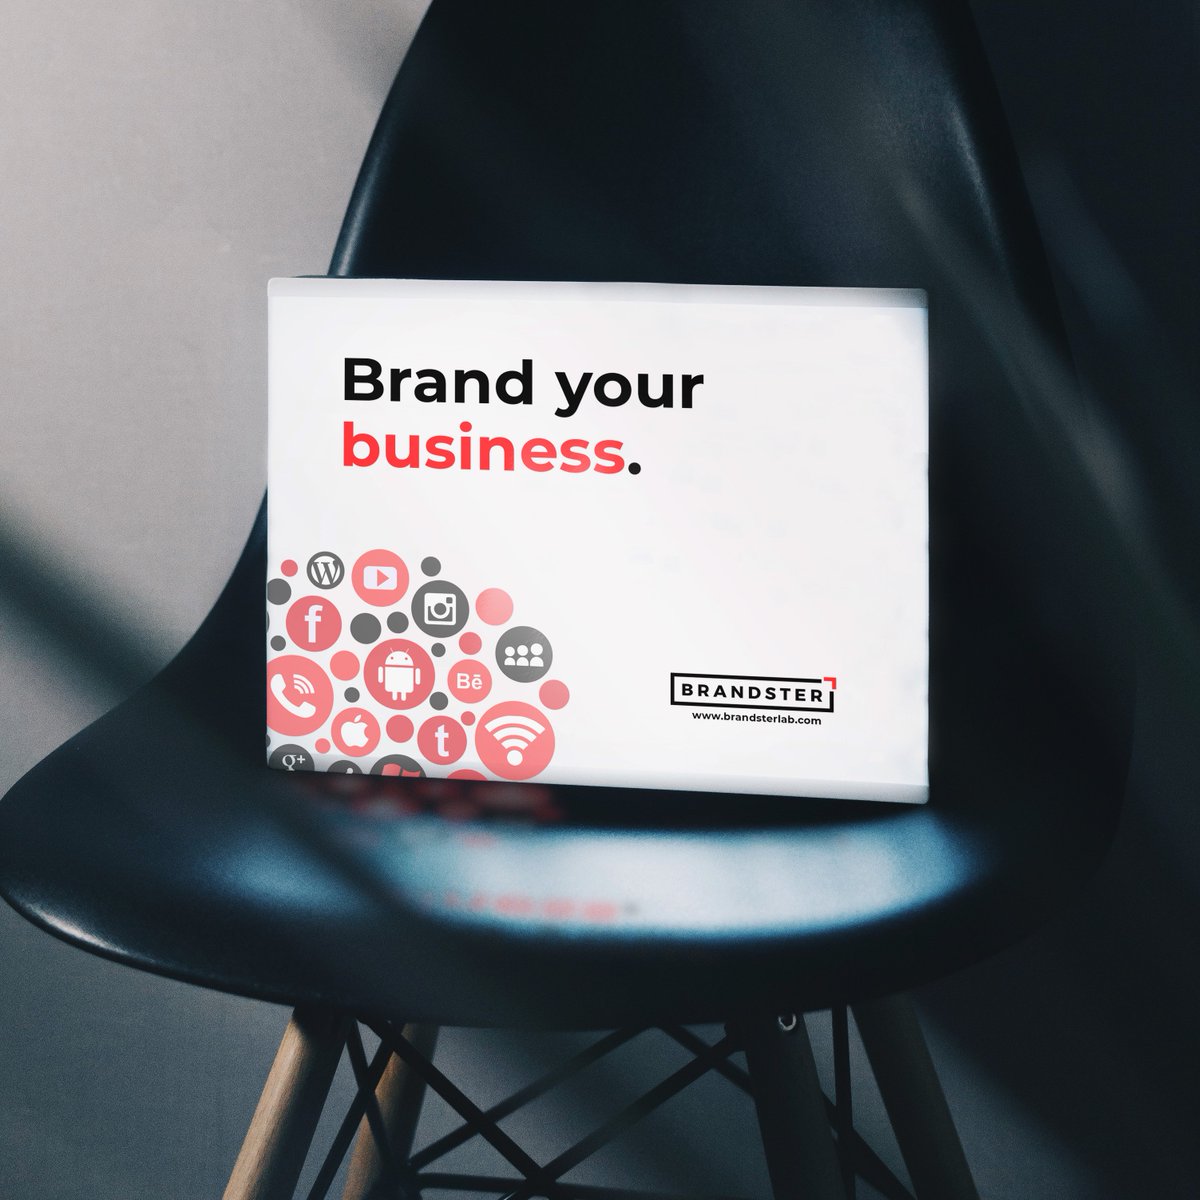 The keys to brand success are self-definition, transparency, authenticity and accountability. – Simon Mainwaring

#corporateBranding #Branding #BrandingDubai #DubaiBranding #corporateBrandingDubai #Dubaimarketing #onlinemarketing
#branding #graphicdesign #brand #logodesign